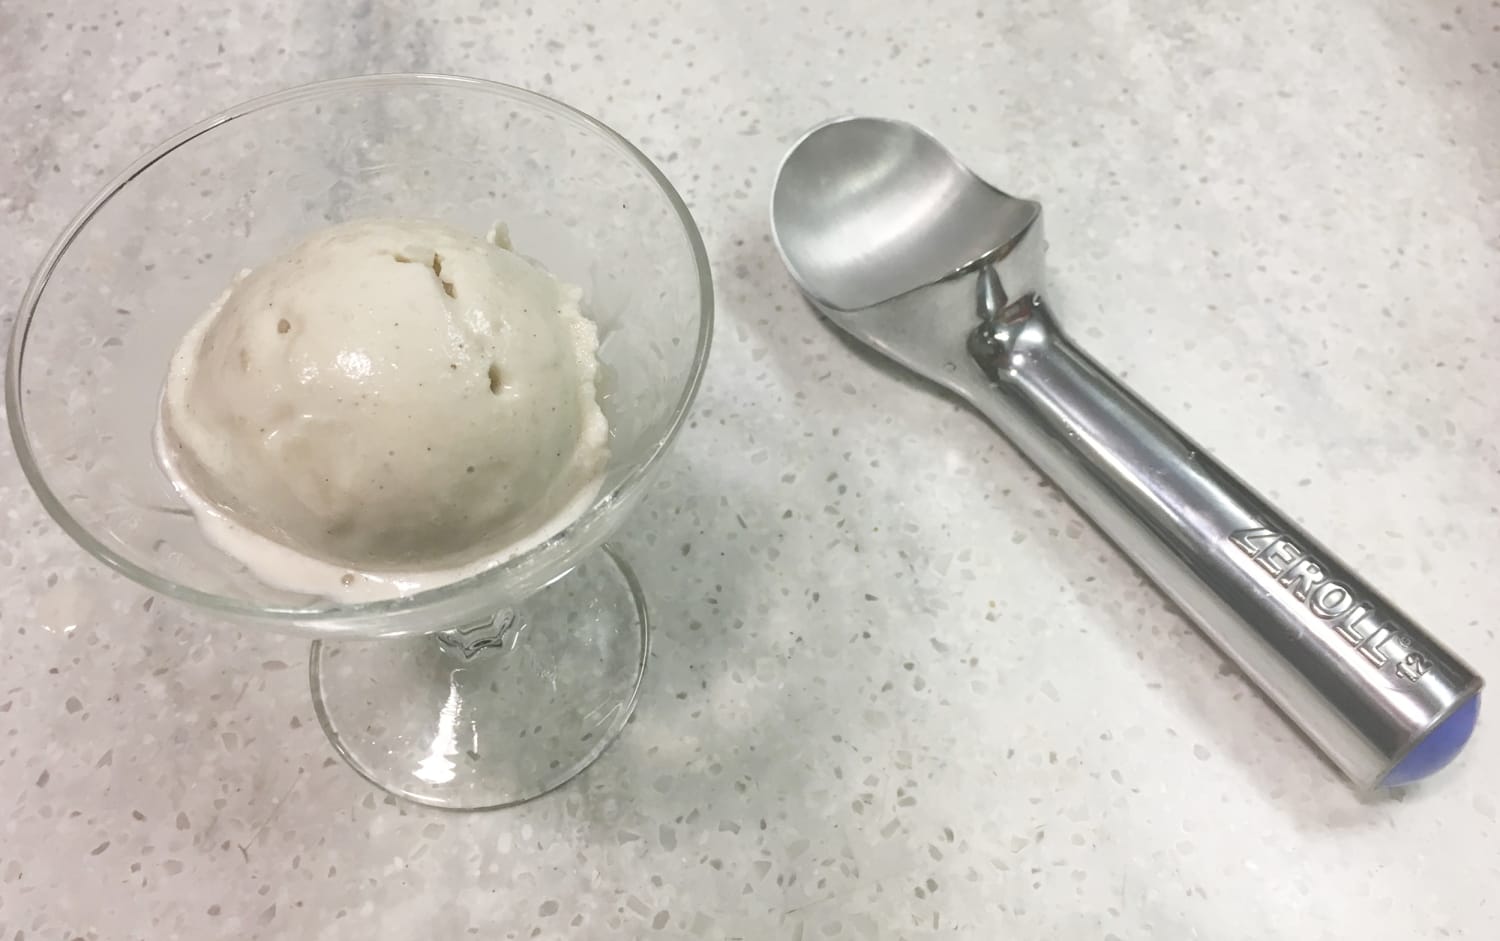 Here's the Scoop - Zeroll Ice Cream Scoop Review 